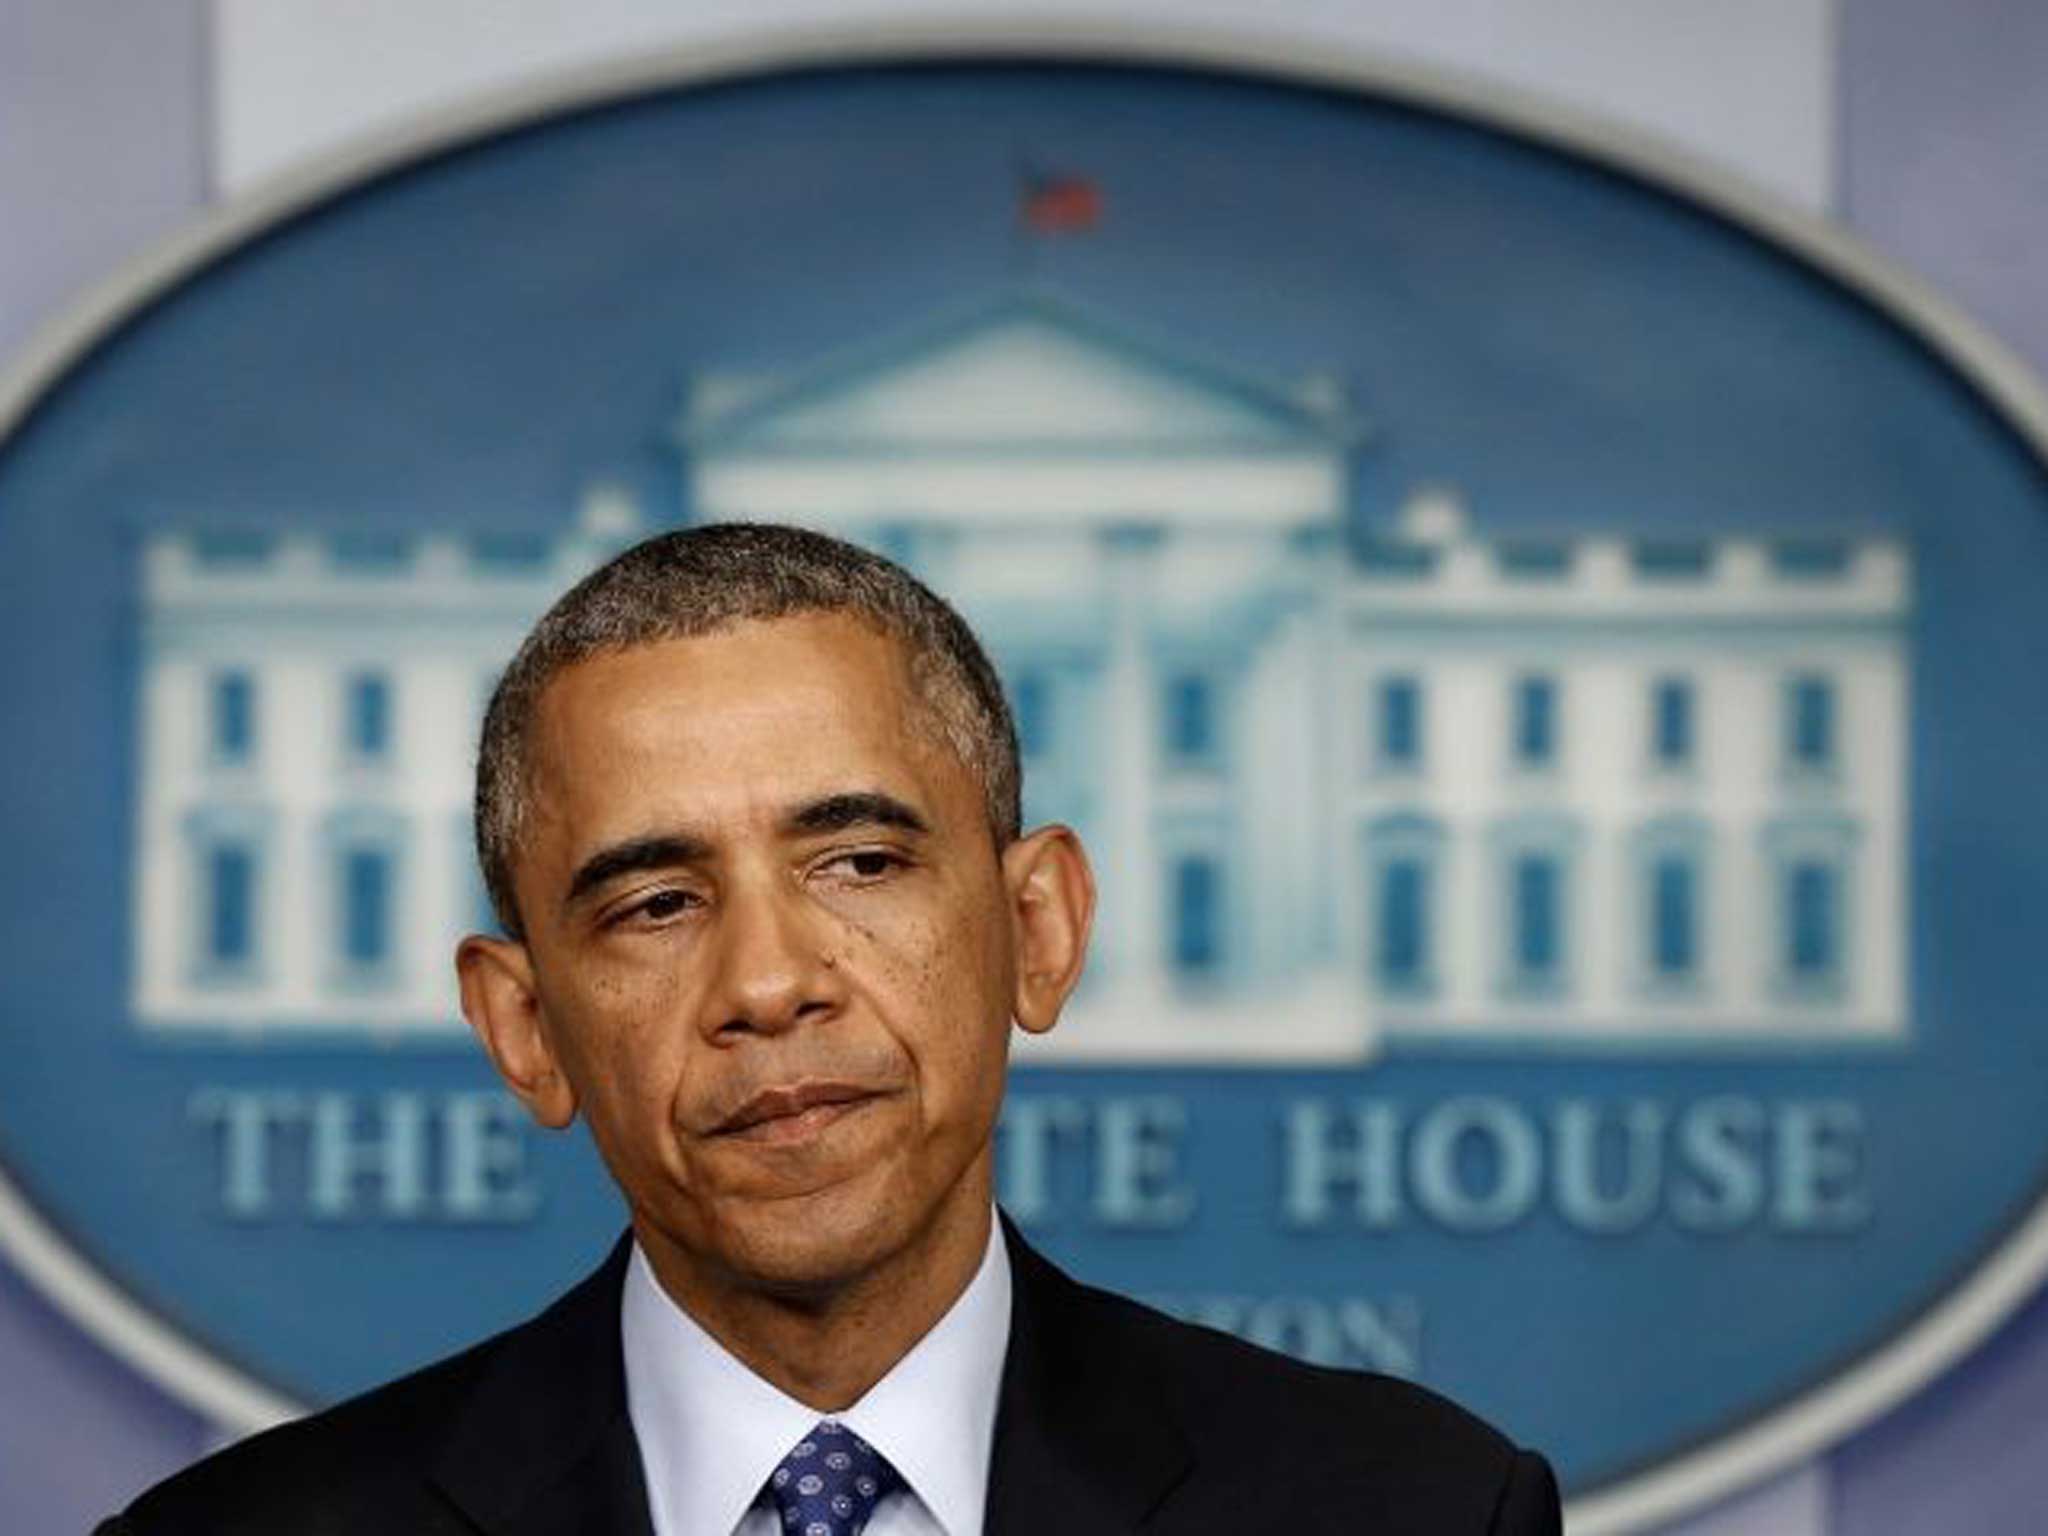 Hot seat: President Obama briefing on Iraq last week